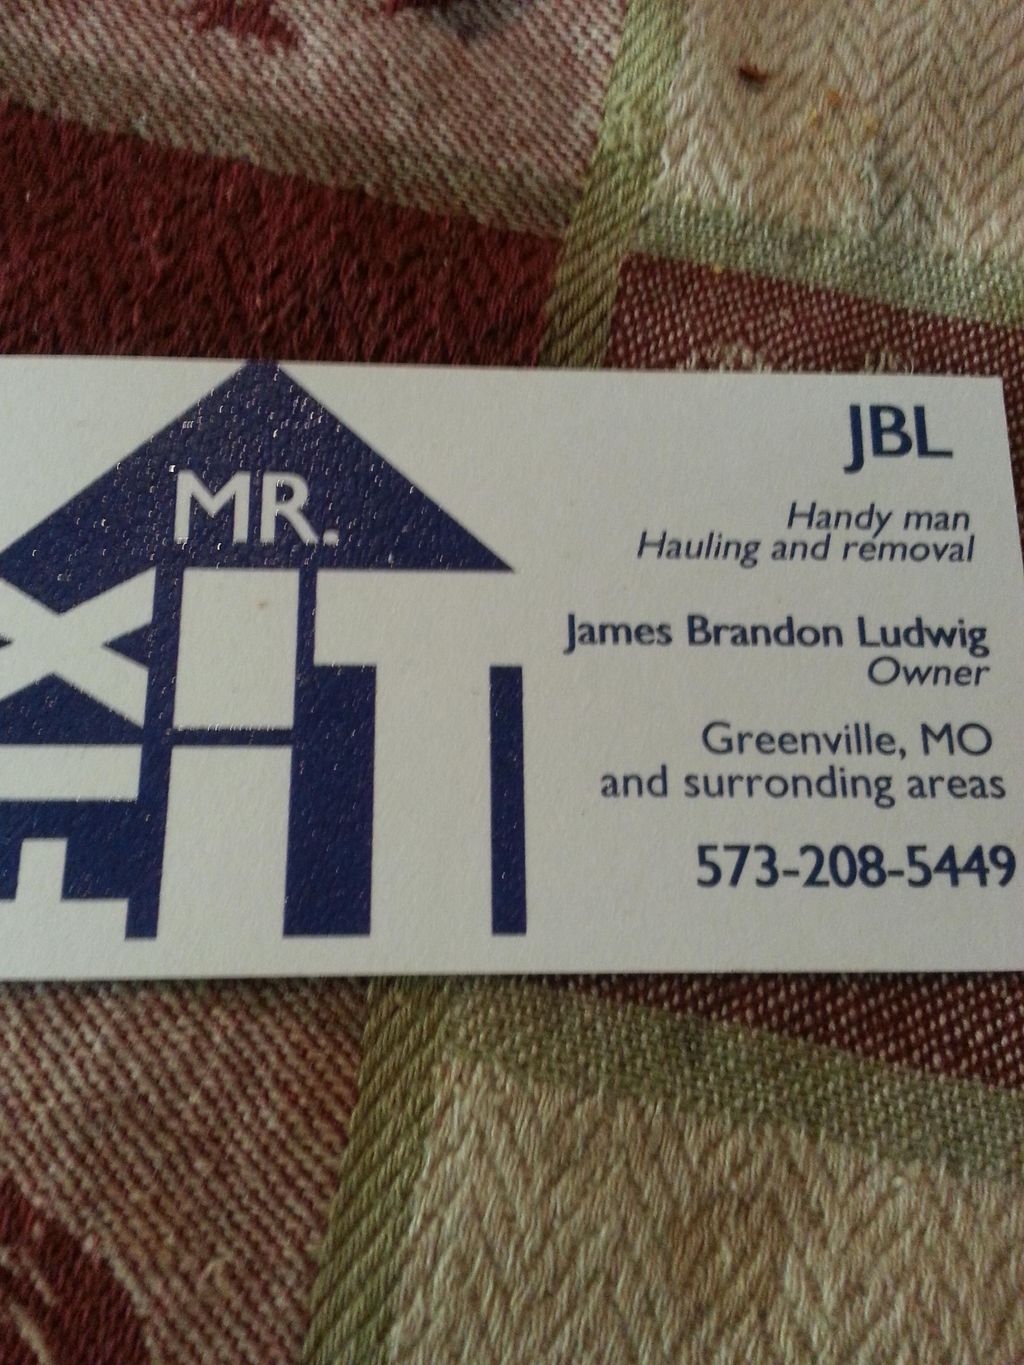 jbl hauling , removal and handyman service